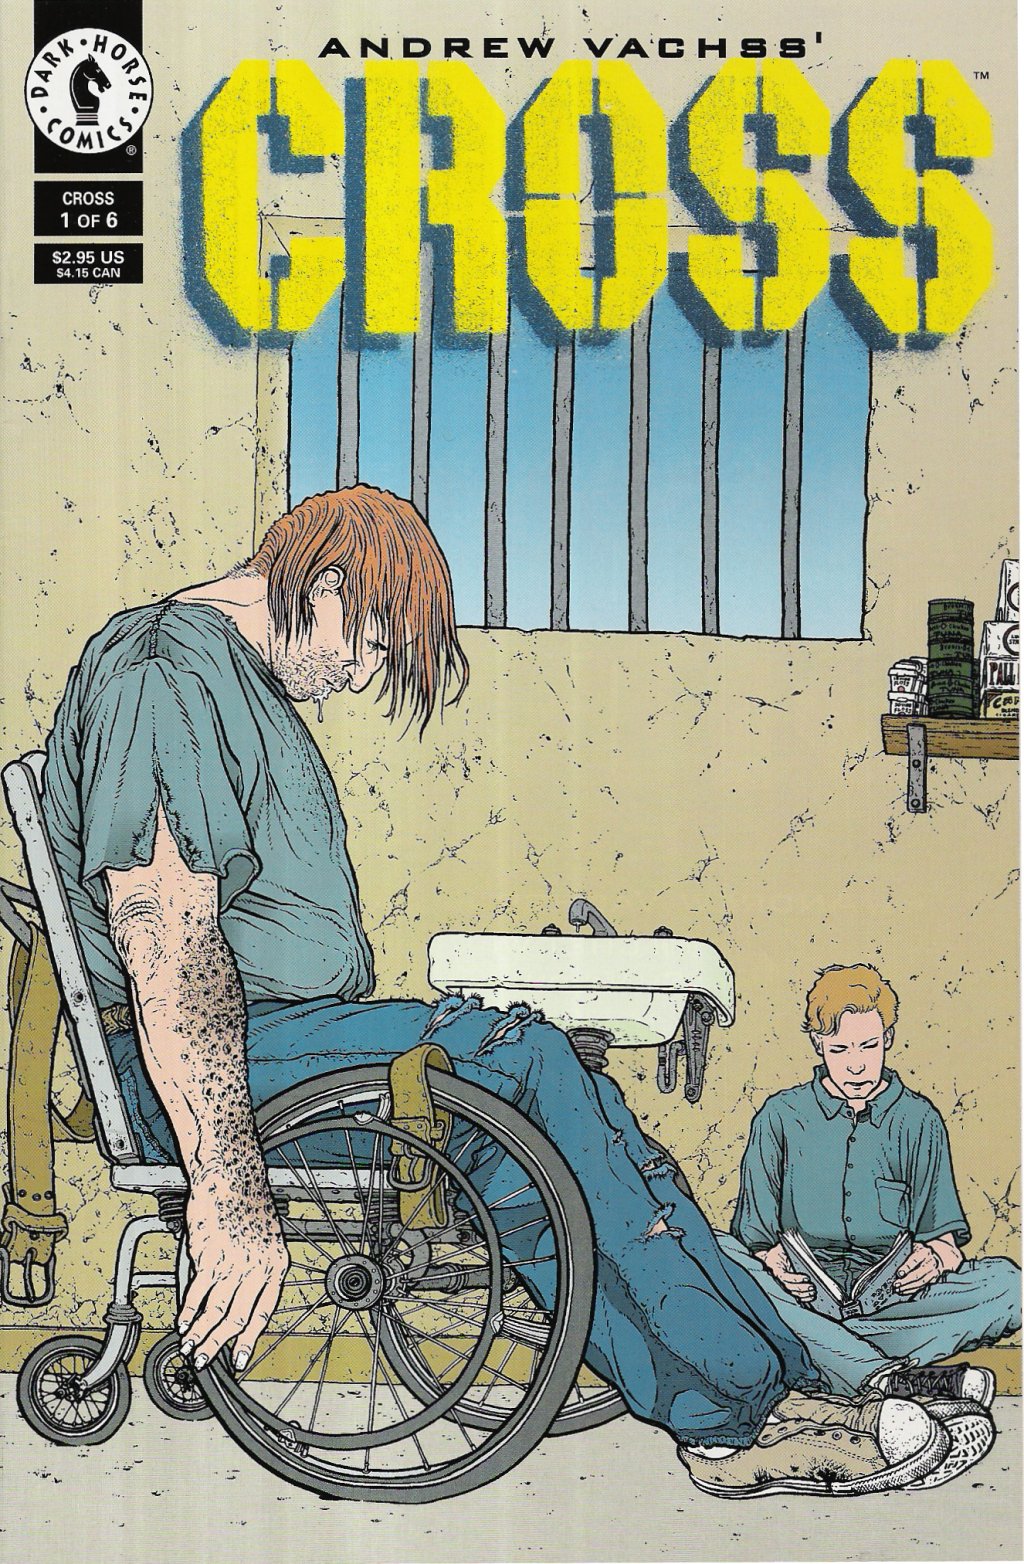 Read online Cross comic -  Issue #1 - 1